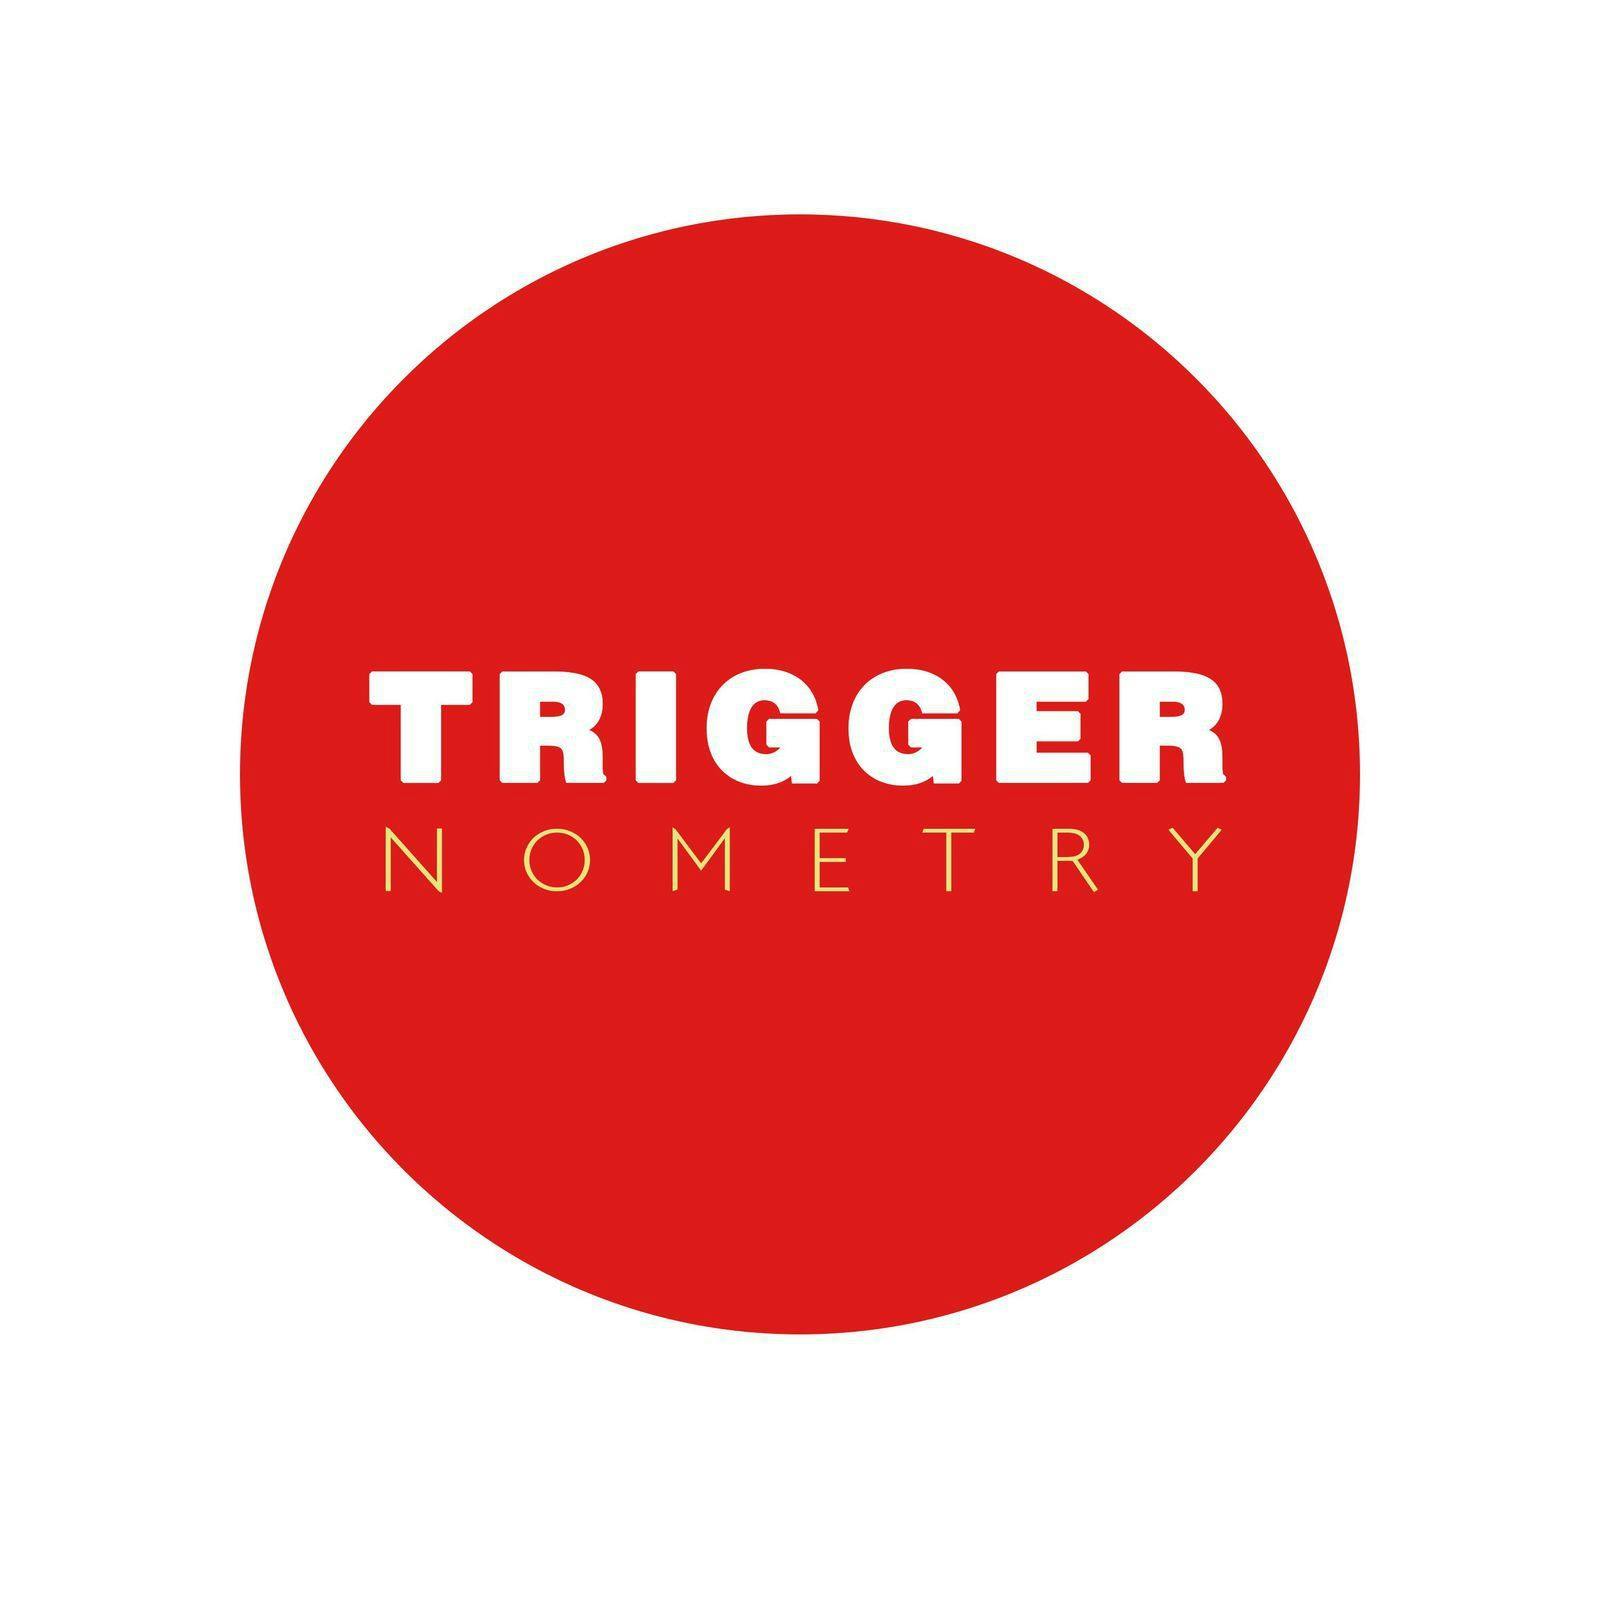 Triggernometry - Ep. 4 Pippa Malmgren